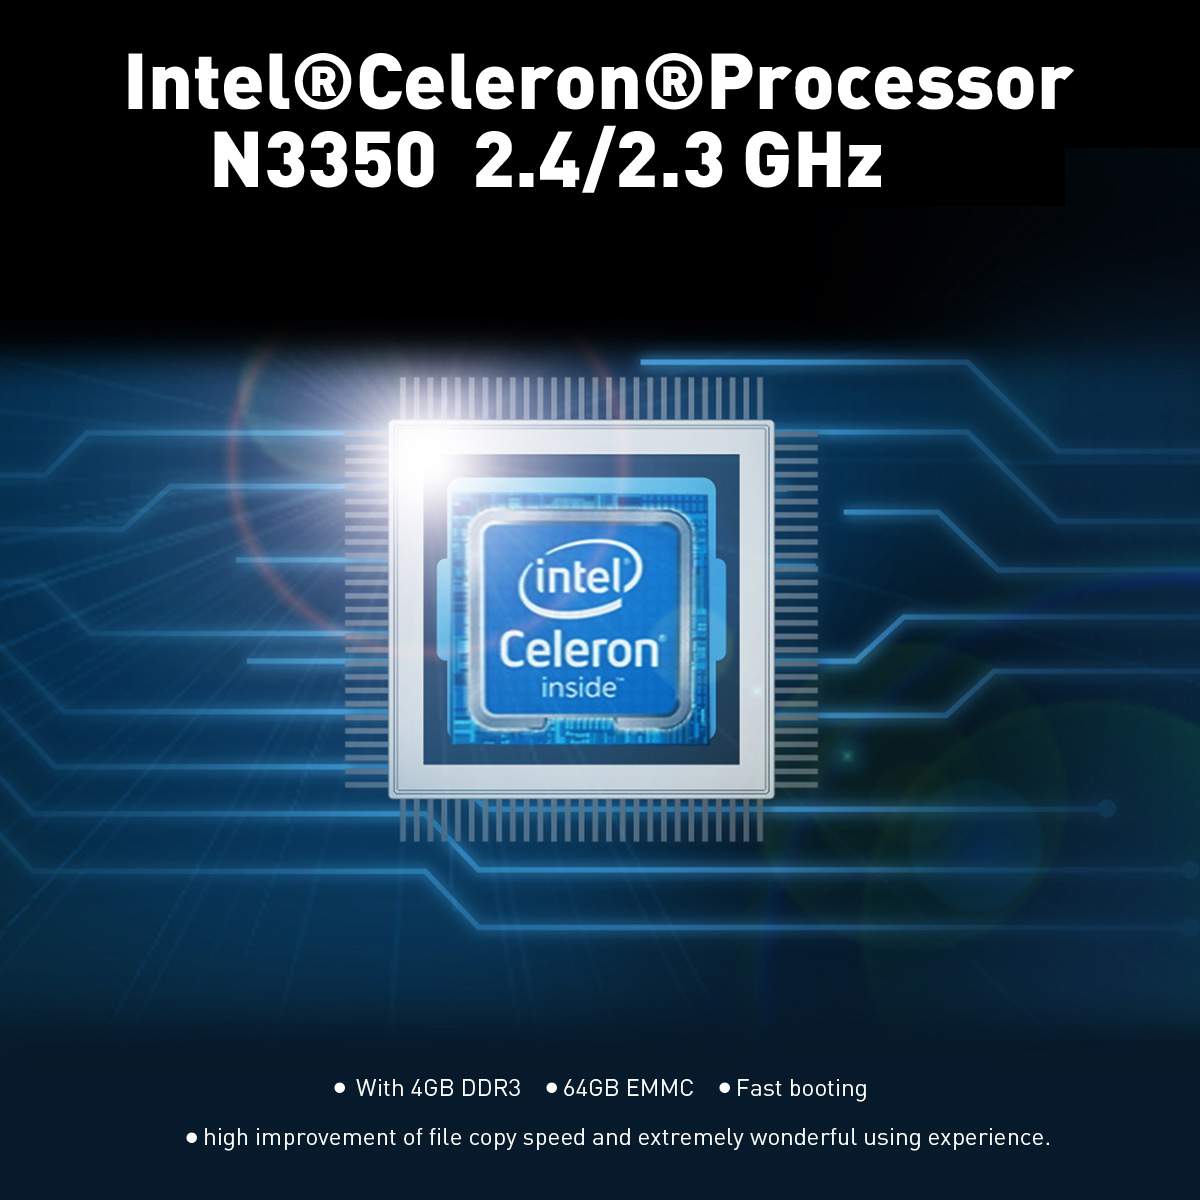 Great Wall W1410A 14 inch Windows 10 Intel Celeron N3350 2.4GHz 4GB 64GB 37W Long-time Battery WIFI BT LAN Notebook Sliver